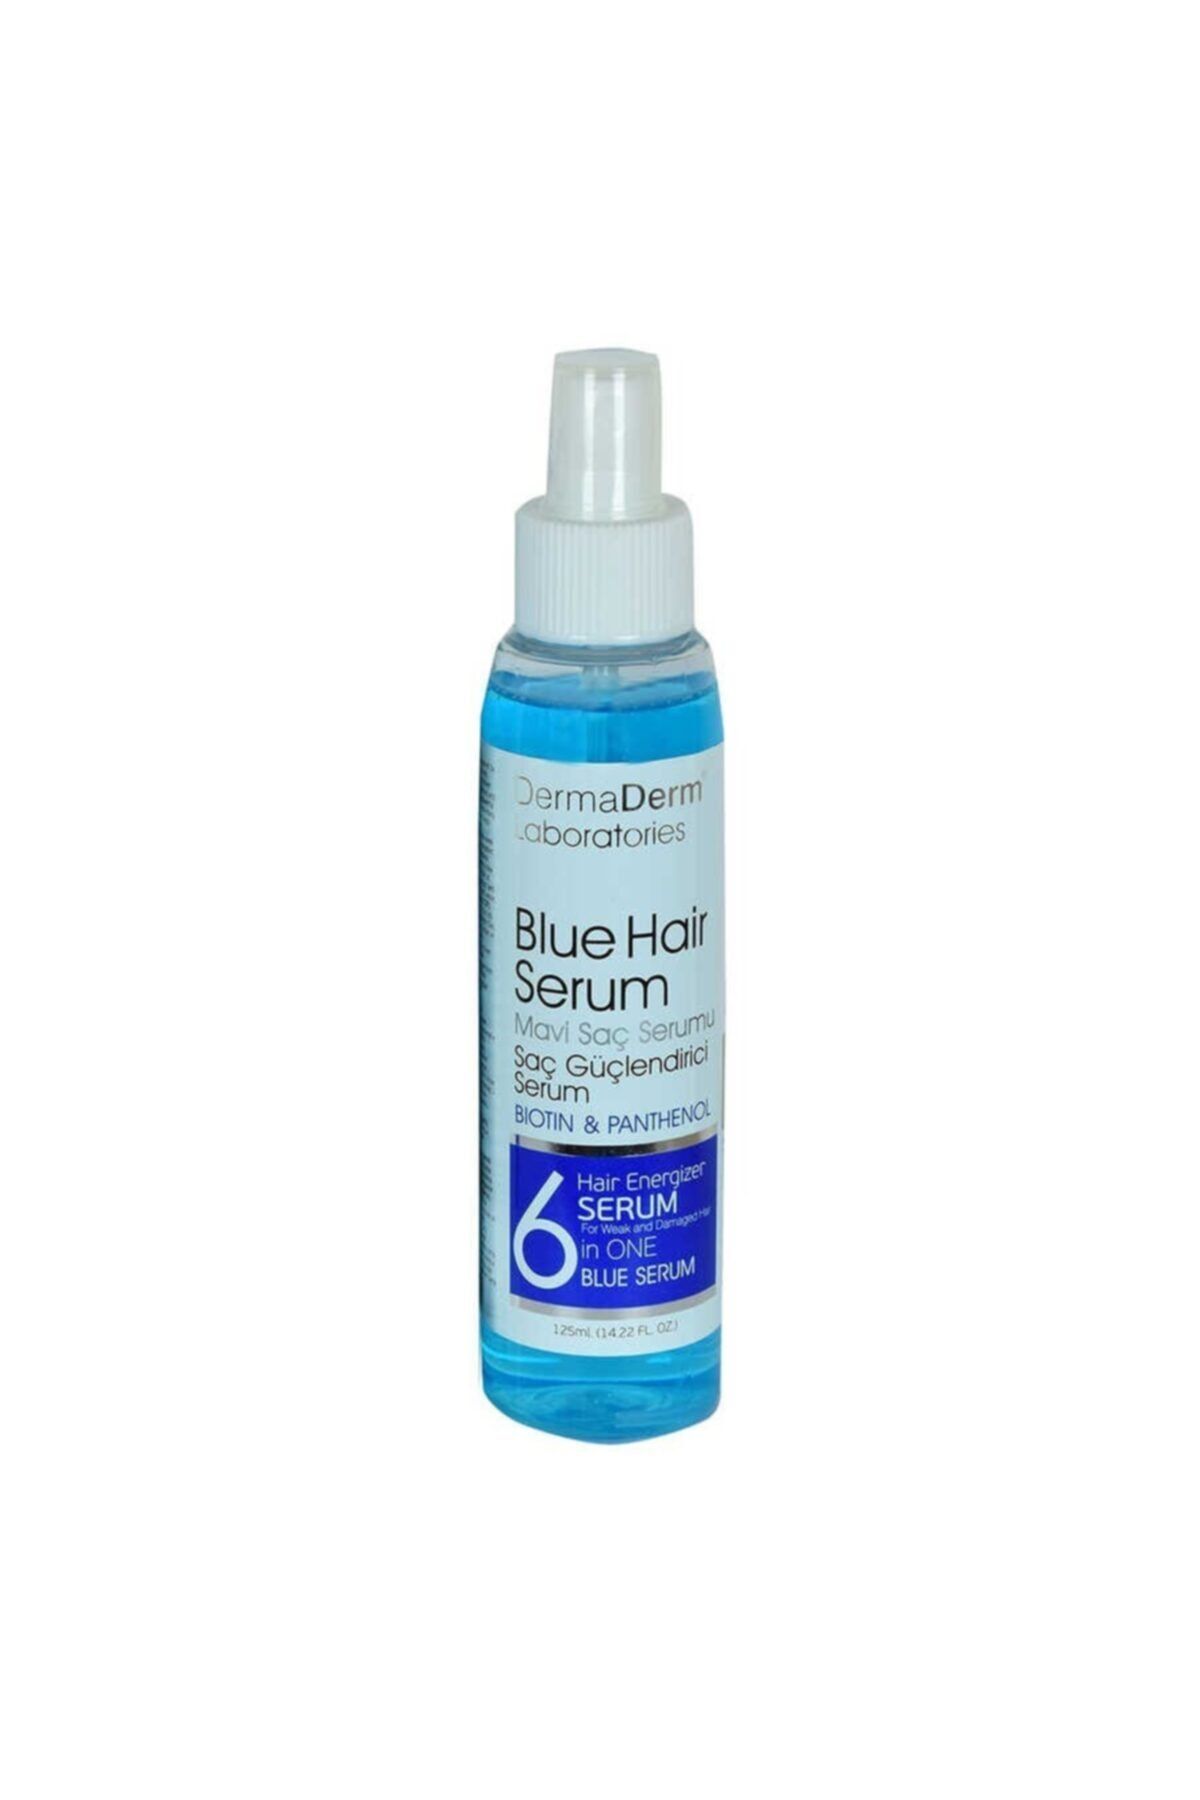 DermaDerm Mavi Serum Saç Dökülmesine Karşı Etkili Saç Güçlendirici Mavi Saç Serumu Mavi Su 125ml